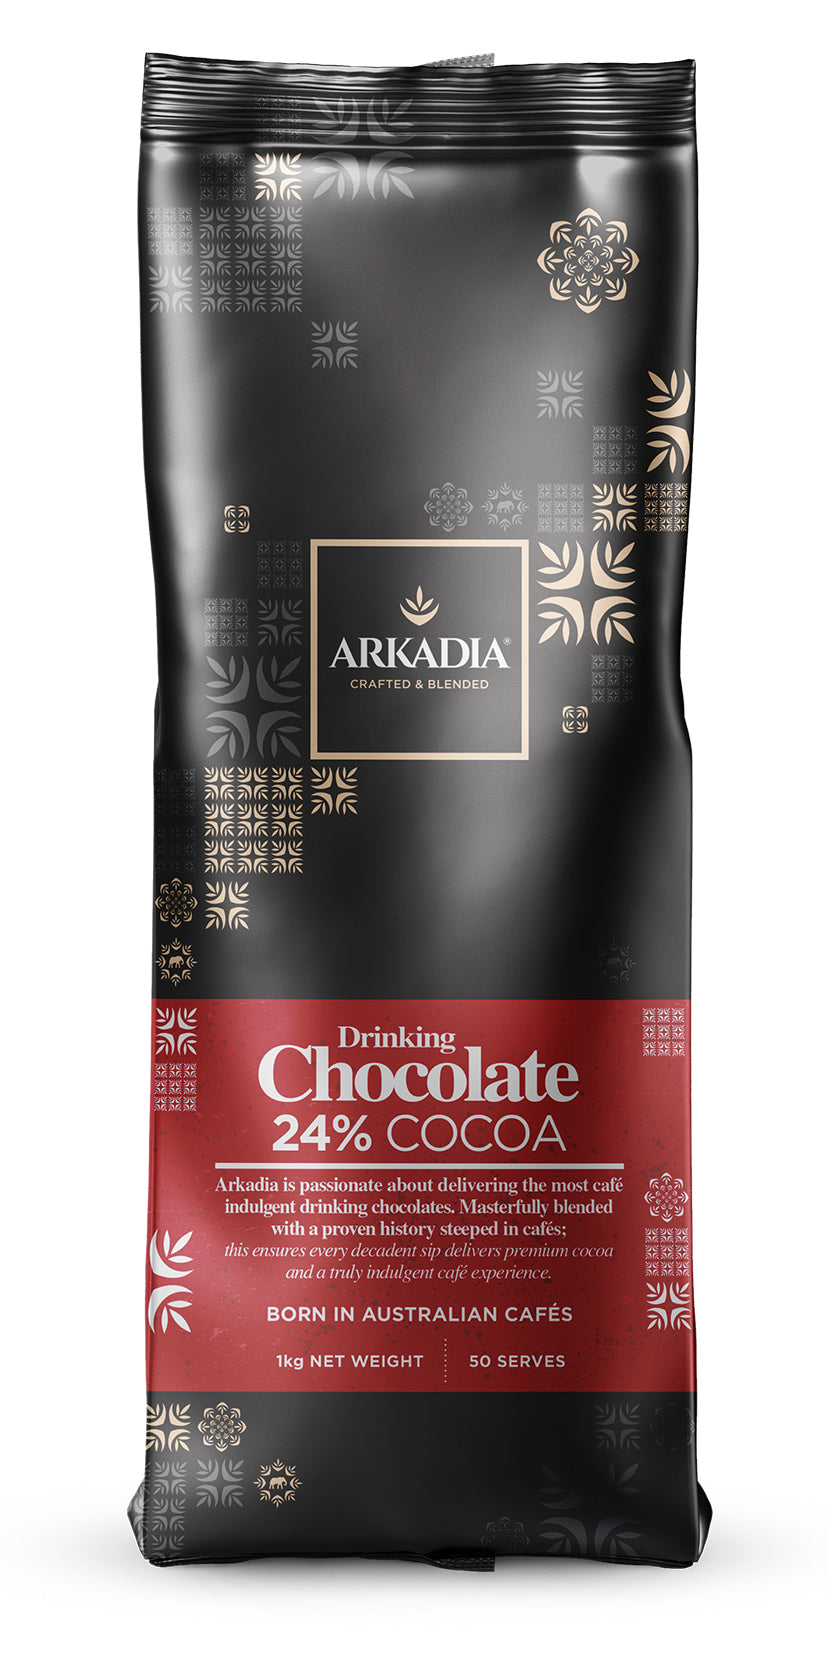 Drinking Chocolate 24% Cocoa